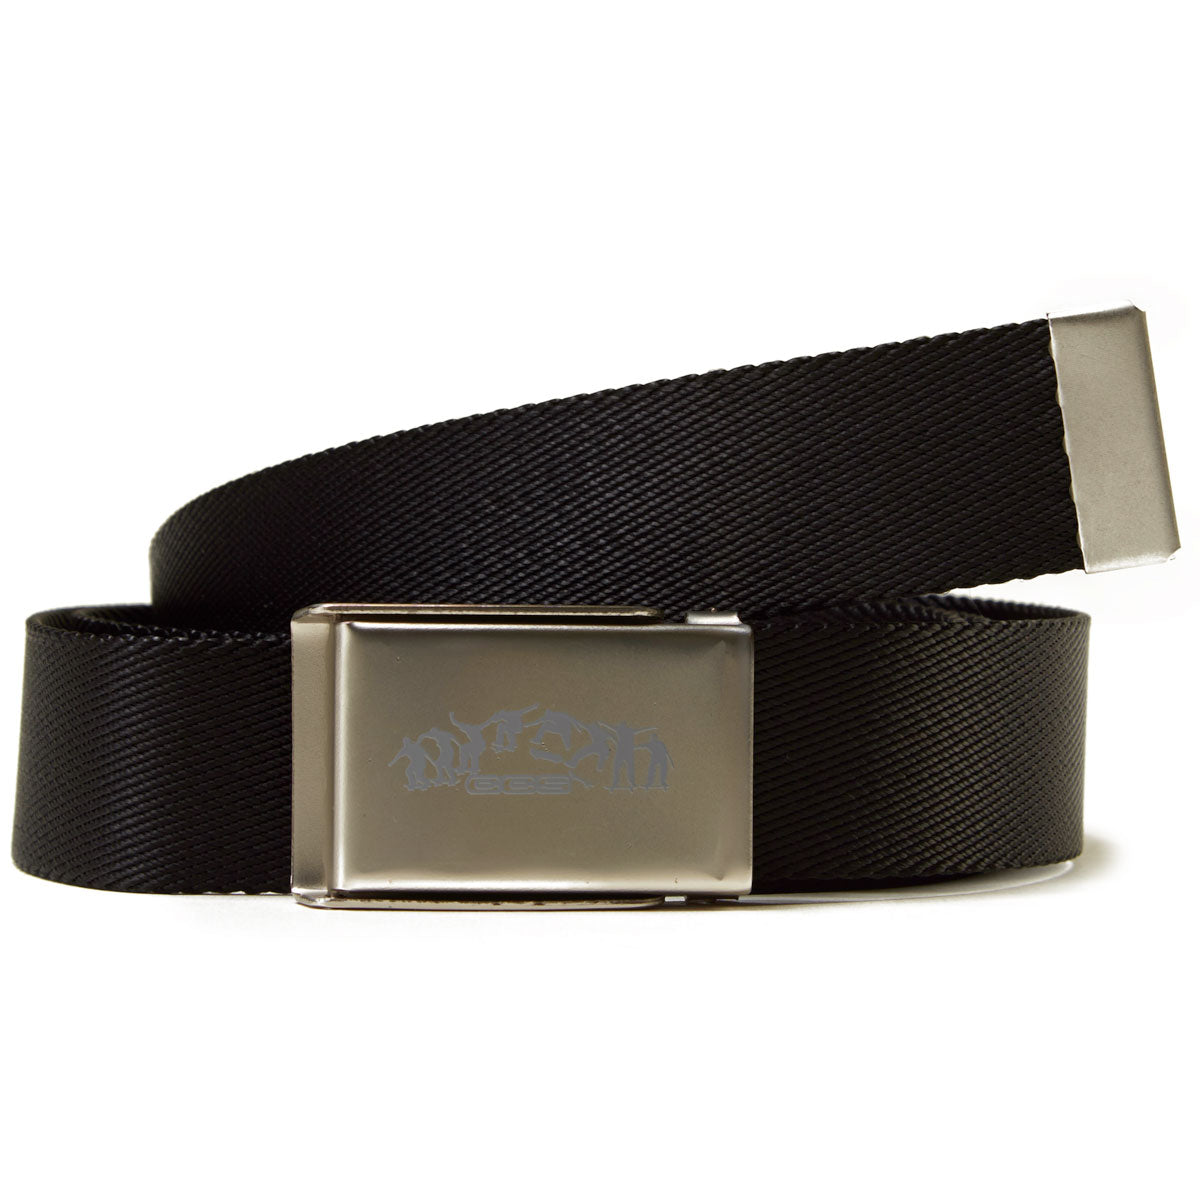 CCS Silver Kickflip Buckle Belt - Black image 1